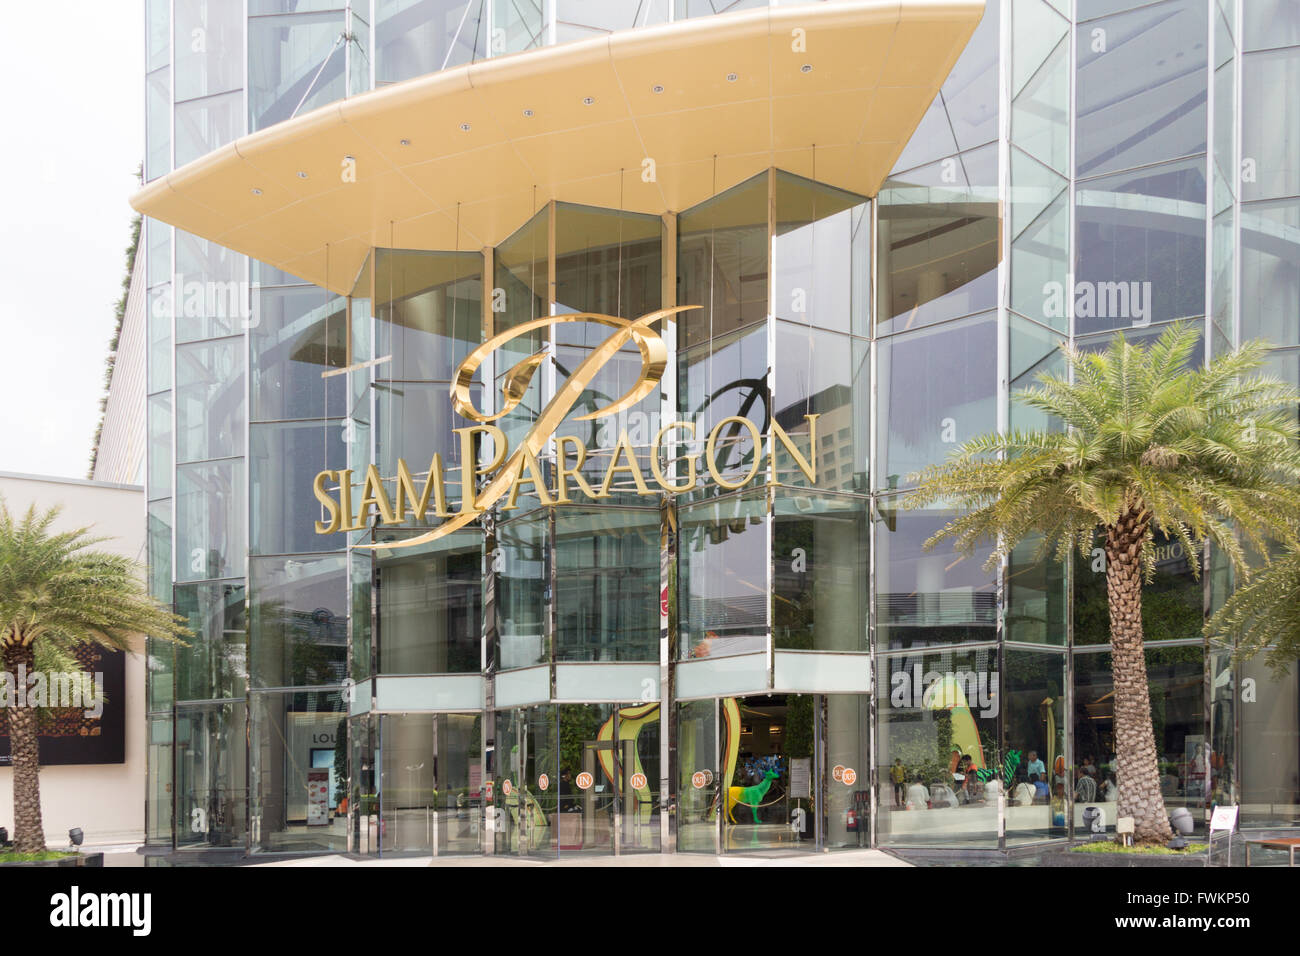 Siam Paragon Shopping Mall, Bangkok Editorial Stock Image - Image of  bright, consumerism: 65607904